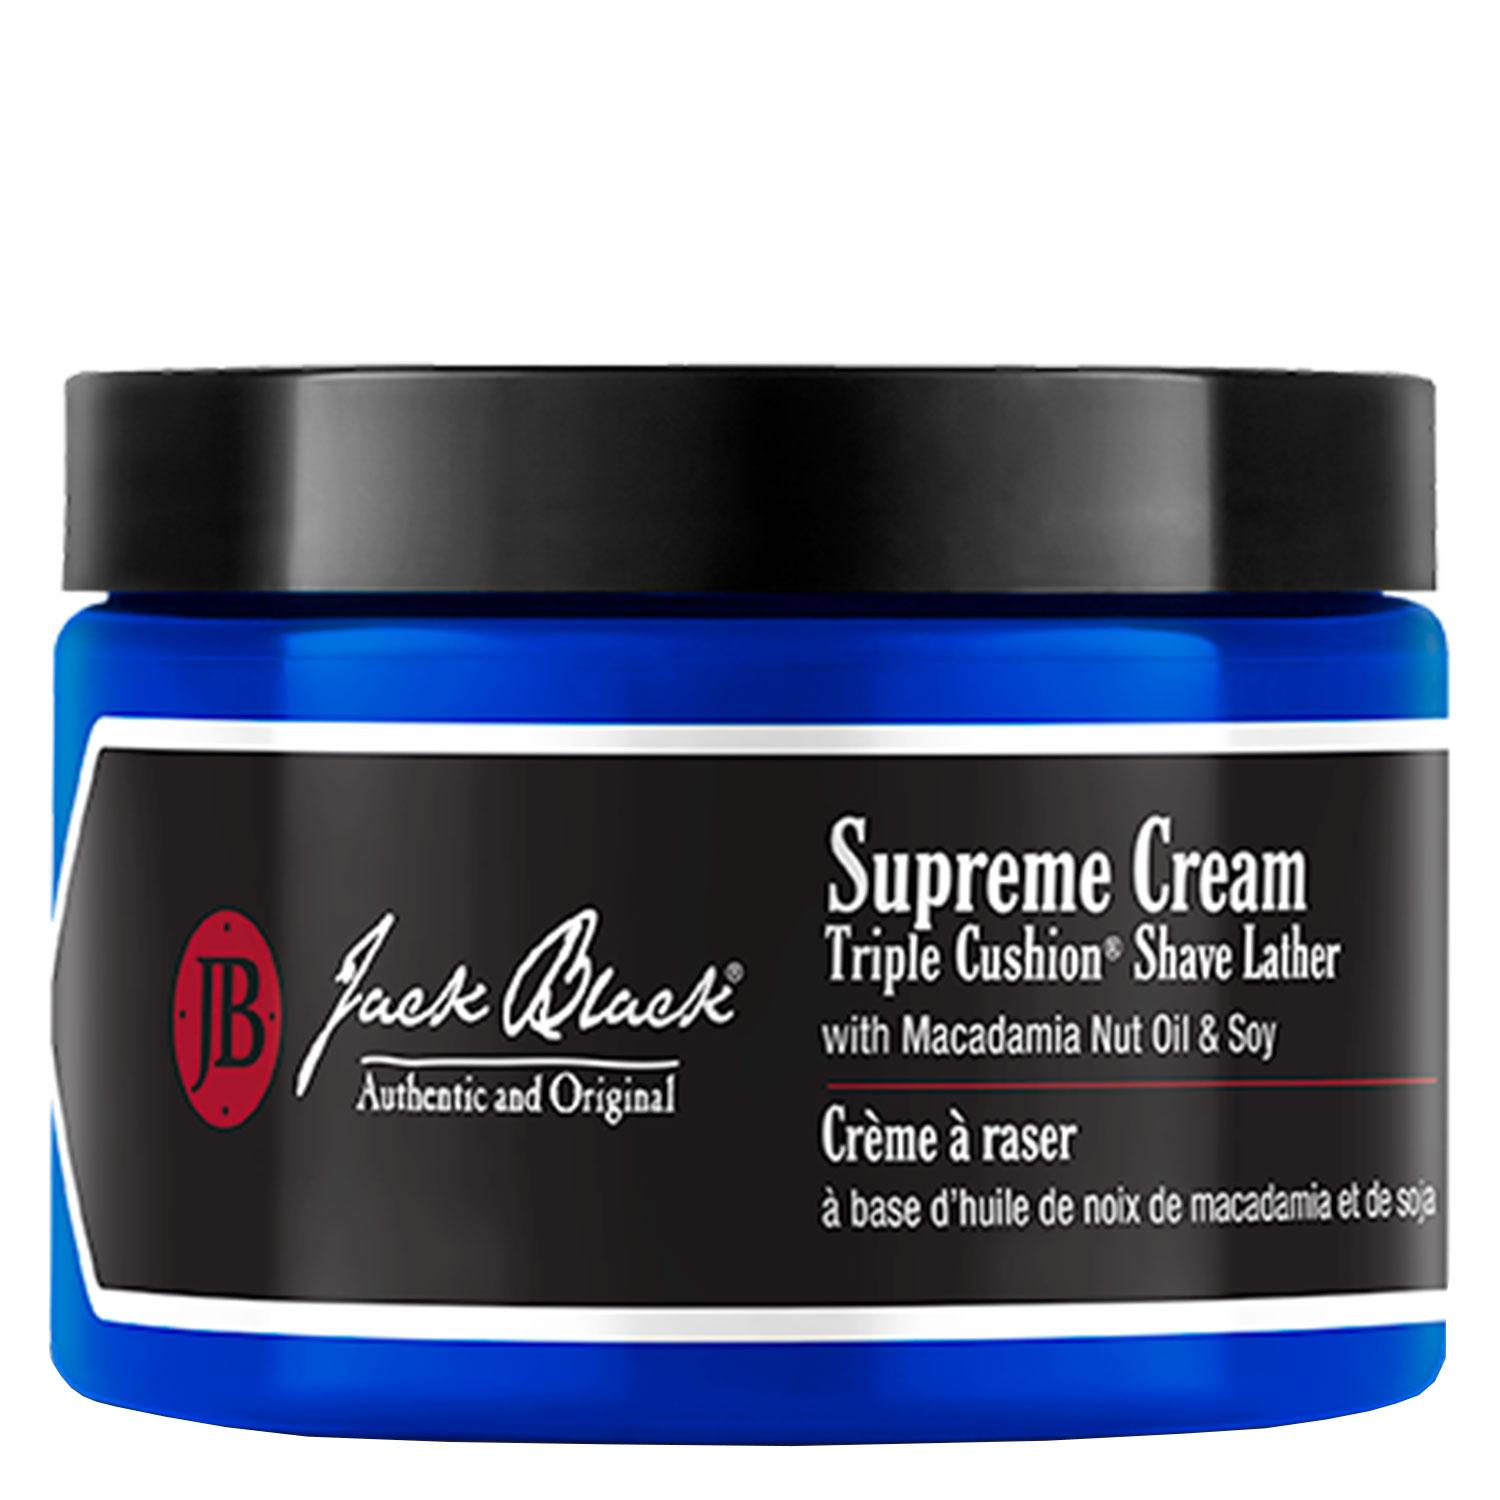 Jack Black - Supreme Cream Triple Cushion Shave